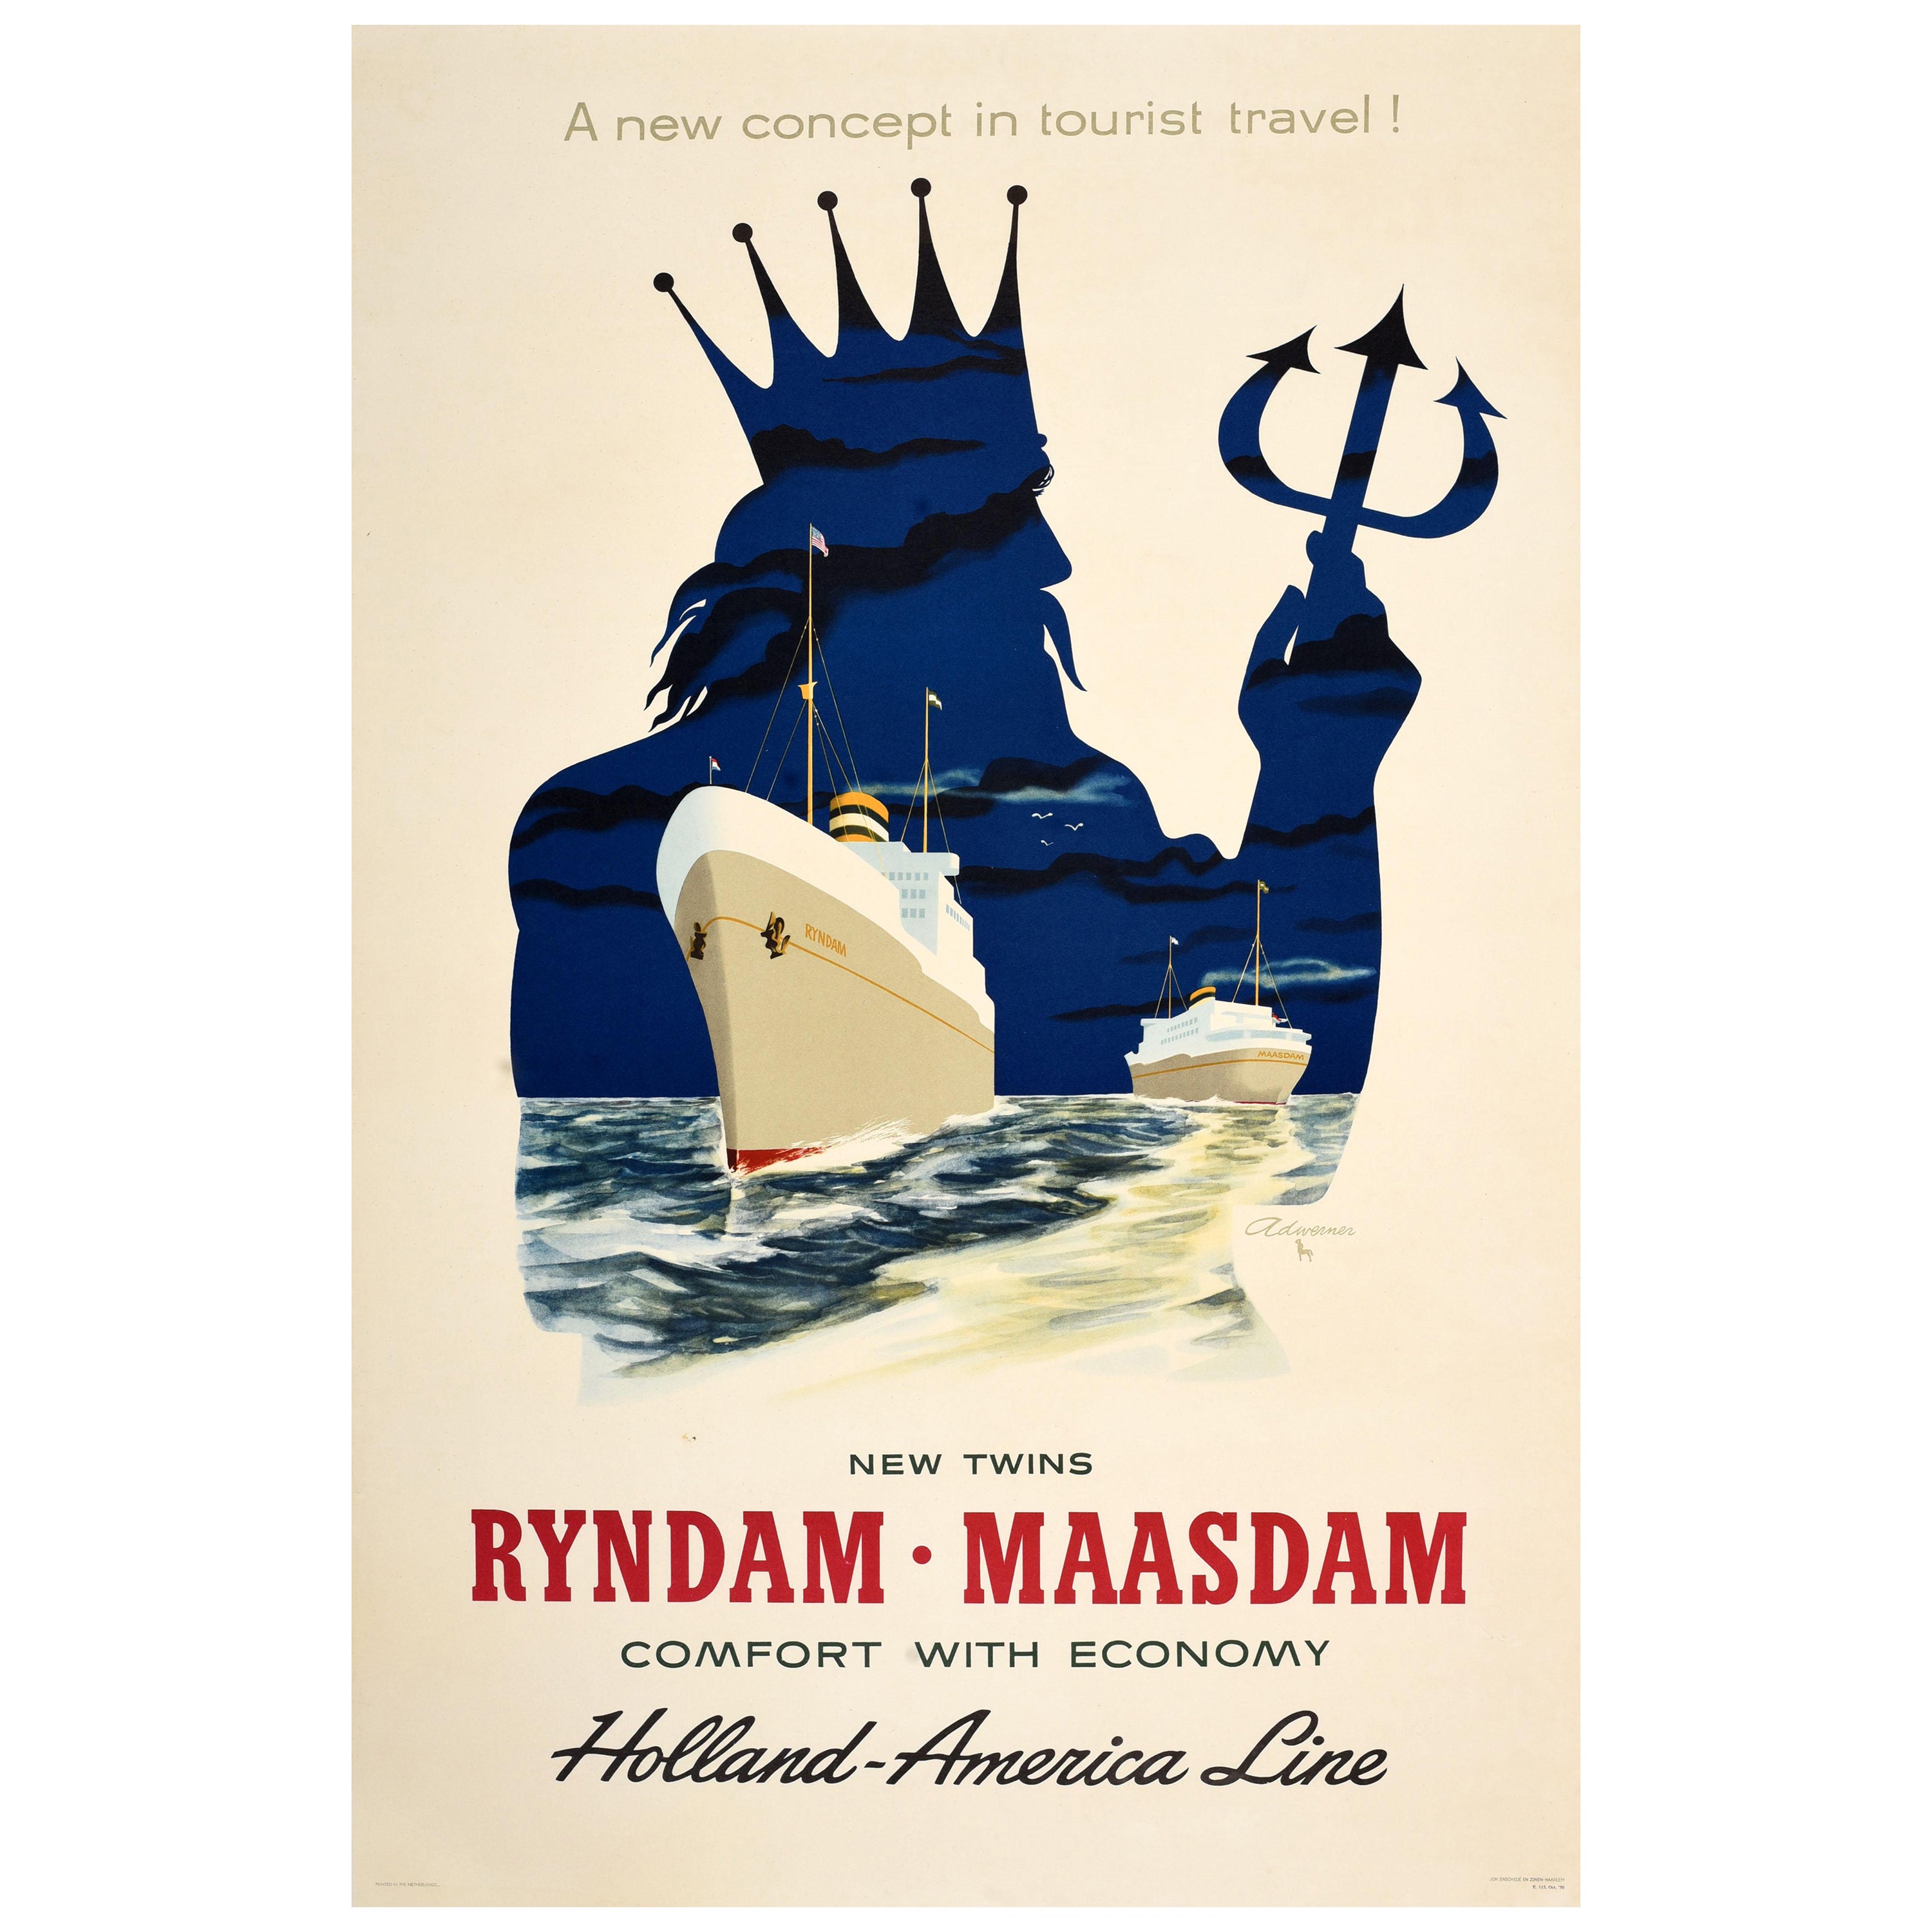 Original Vintage Travel Poster Ryndam Maasdam Holland America Line Poseidon Art For Sale